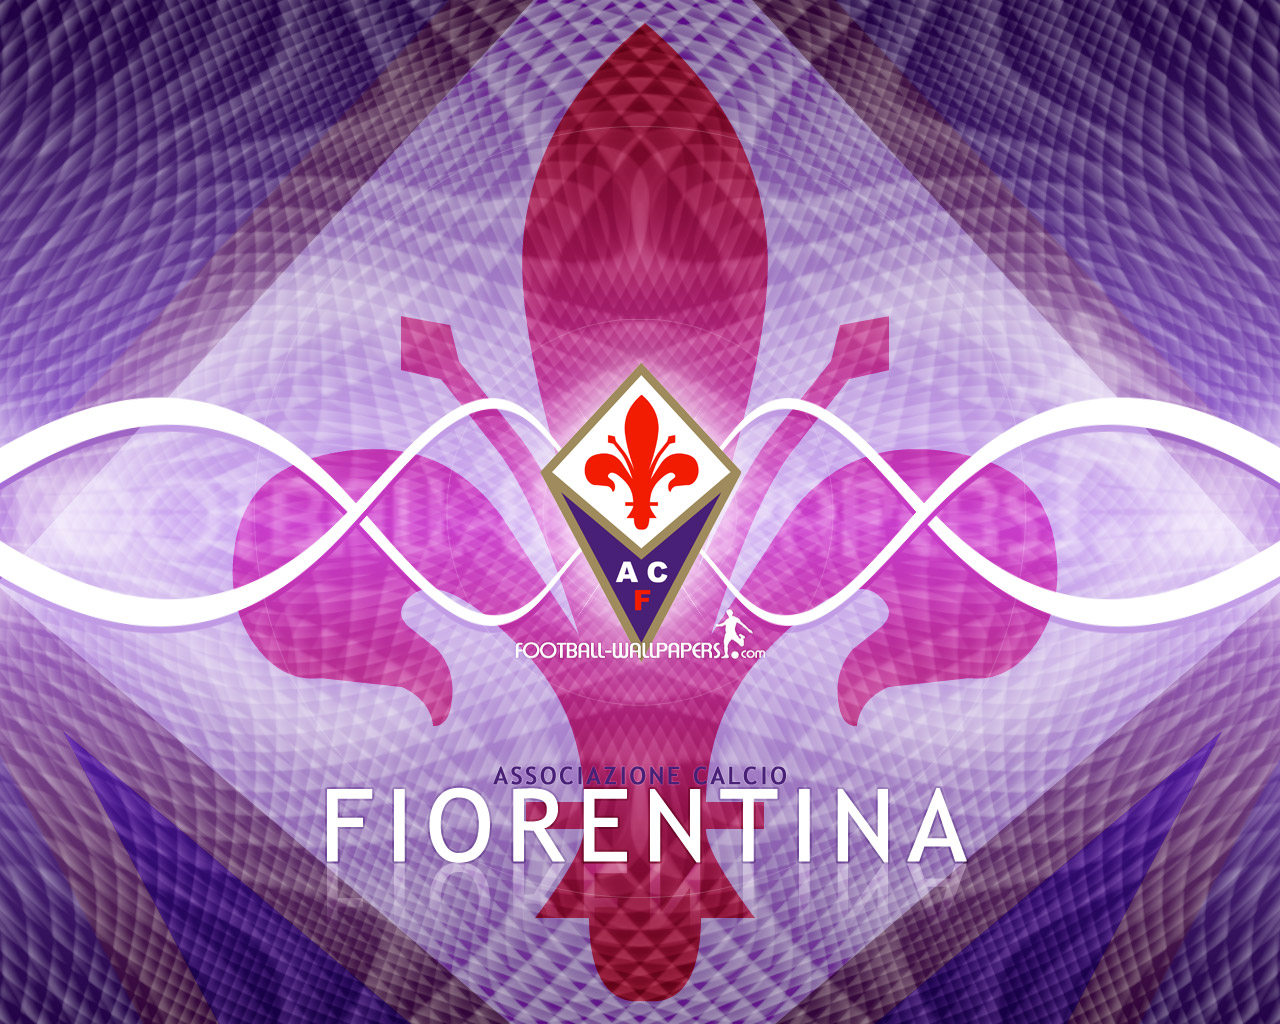 ACF Fiorentina Backgrounds, Compatible - PC, Mobile, Gadgets| 1280x1024 px